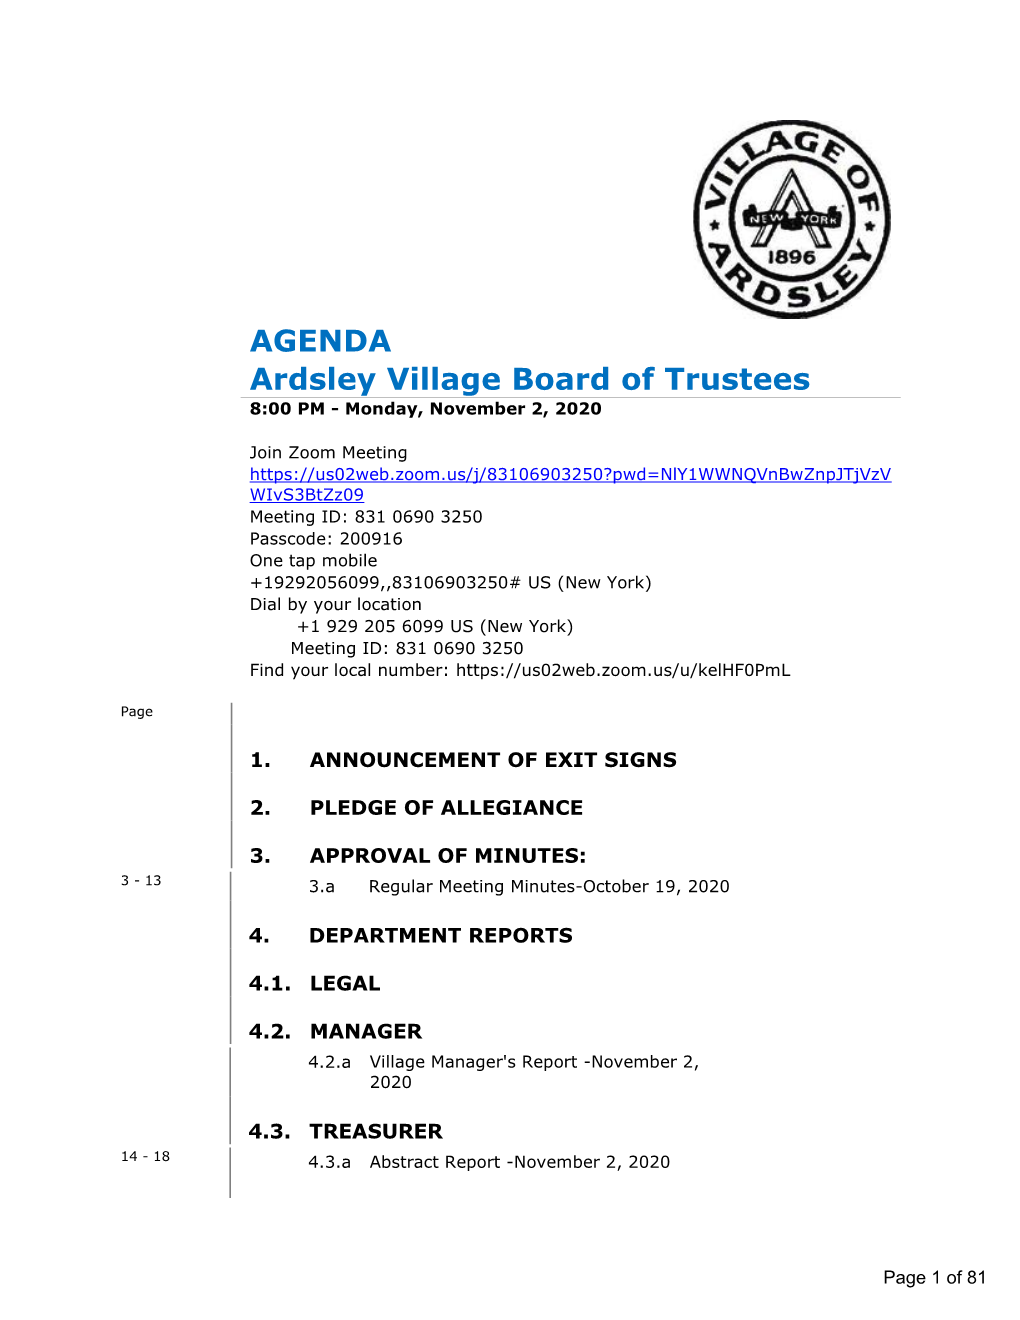 Ardsley Village Board of Trustees 8:00 PM - Monday, November 2, 2020